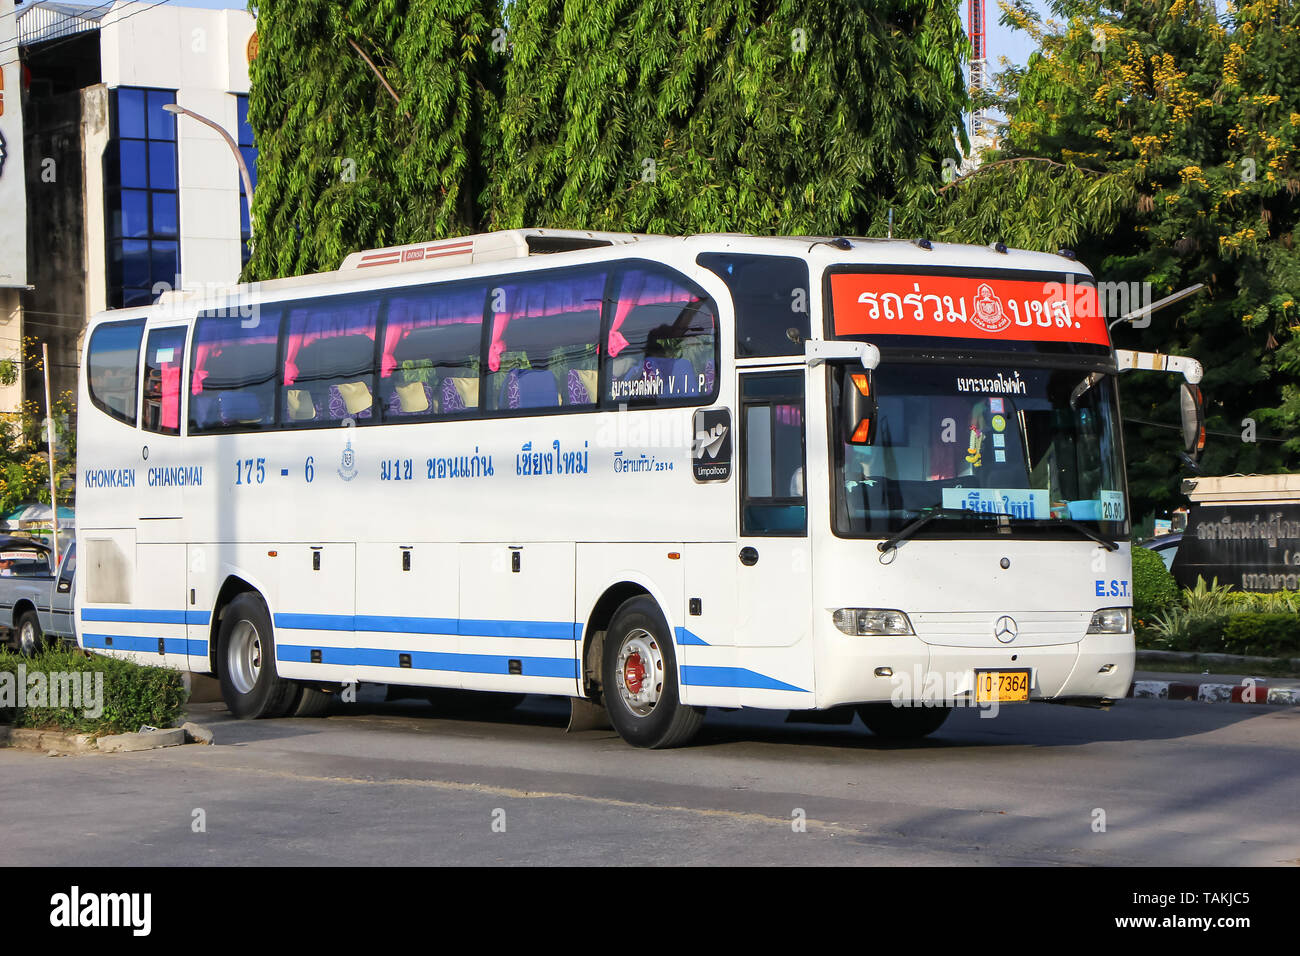 Chiangmai, Thailand - 23. Oktober 2012: esarn Tour Company Bus Route Khonkaen und Chiangmai. Foto bei Chiangmai Busbahnhof, Thailand. Stockfoto